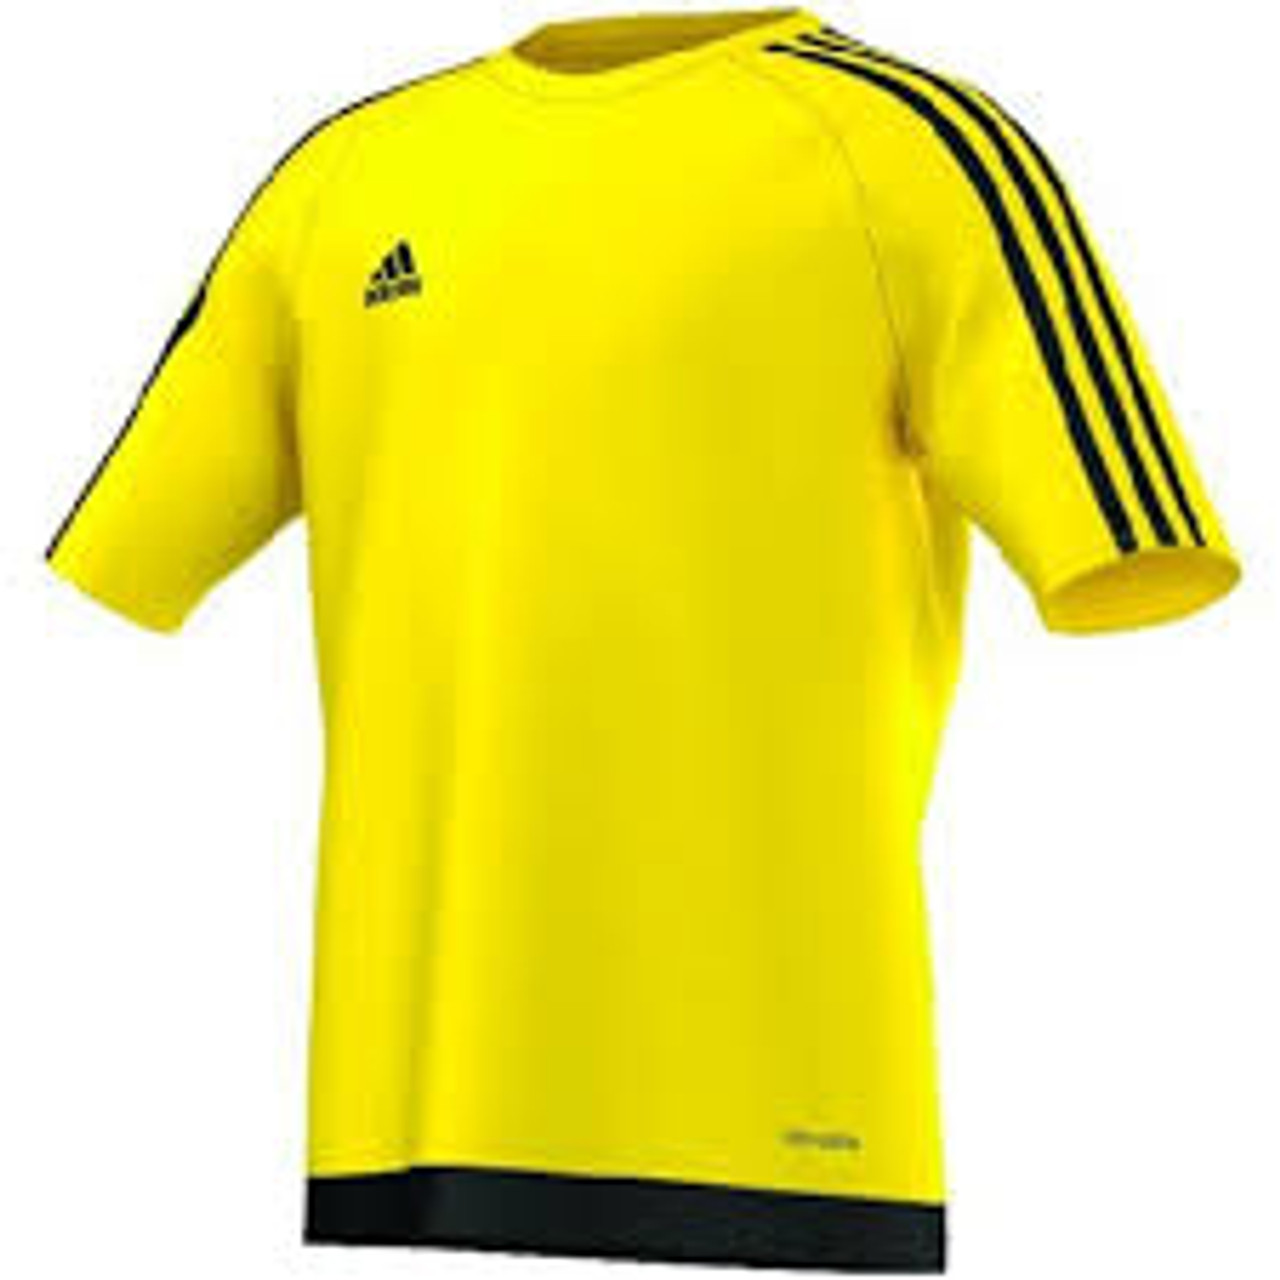 vandaag Aanvulling raken ADIDAS ESTRO 15 YOUTH JERSEY YELLOW soccer team uniform - Soccer Plus